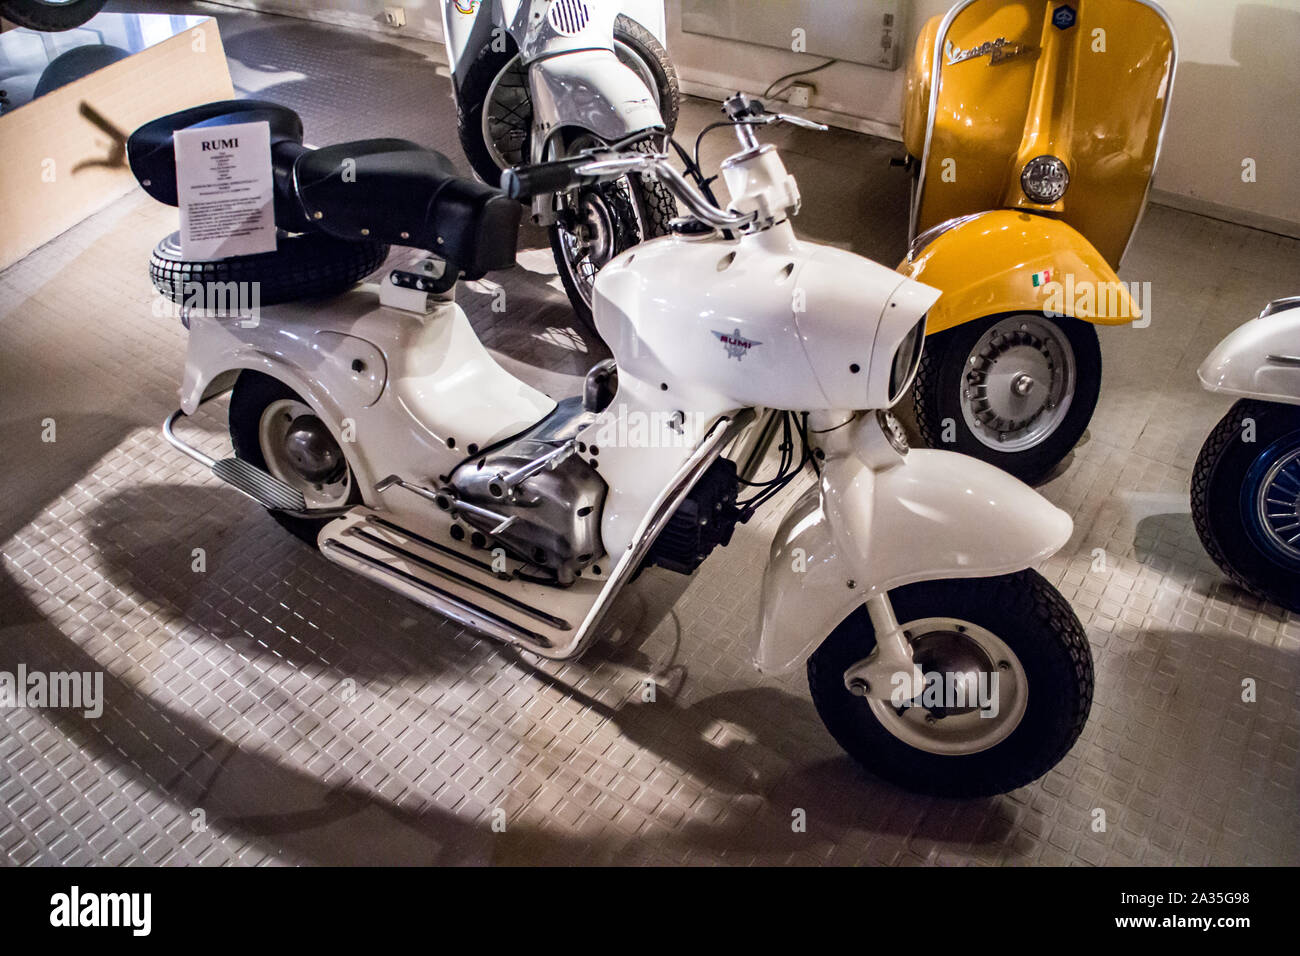 Musée de la Moto à Marseille (France) Motobike Museum in Marseilles :  Scooter Rumi Formichino 125cc twin 1954-1960 (Italian Stock Photo - Alamy